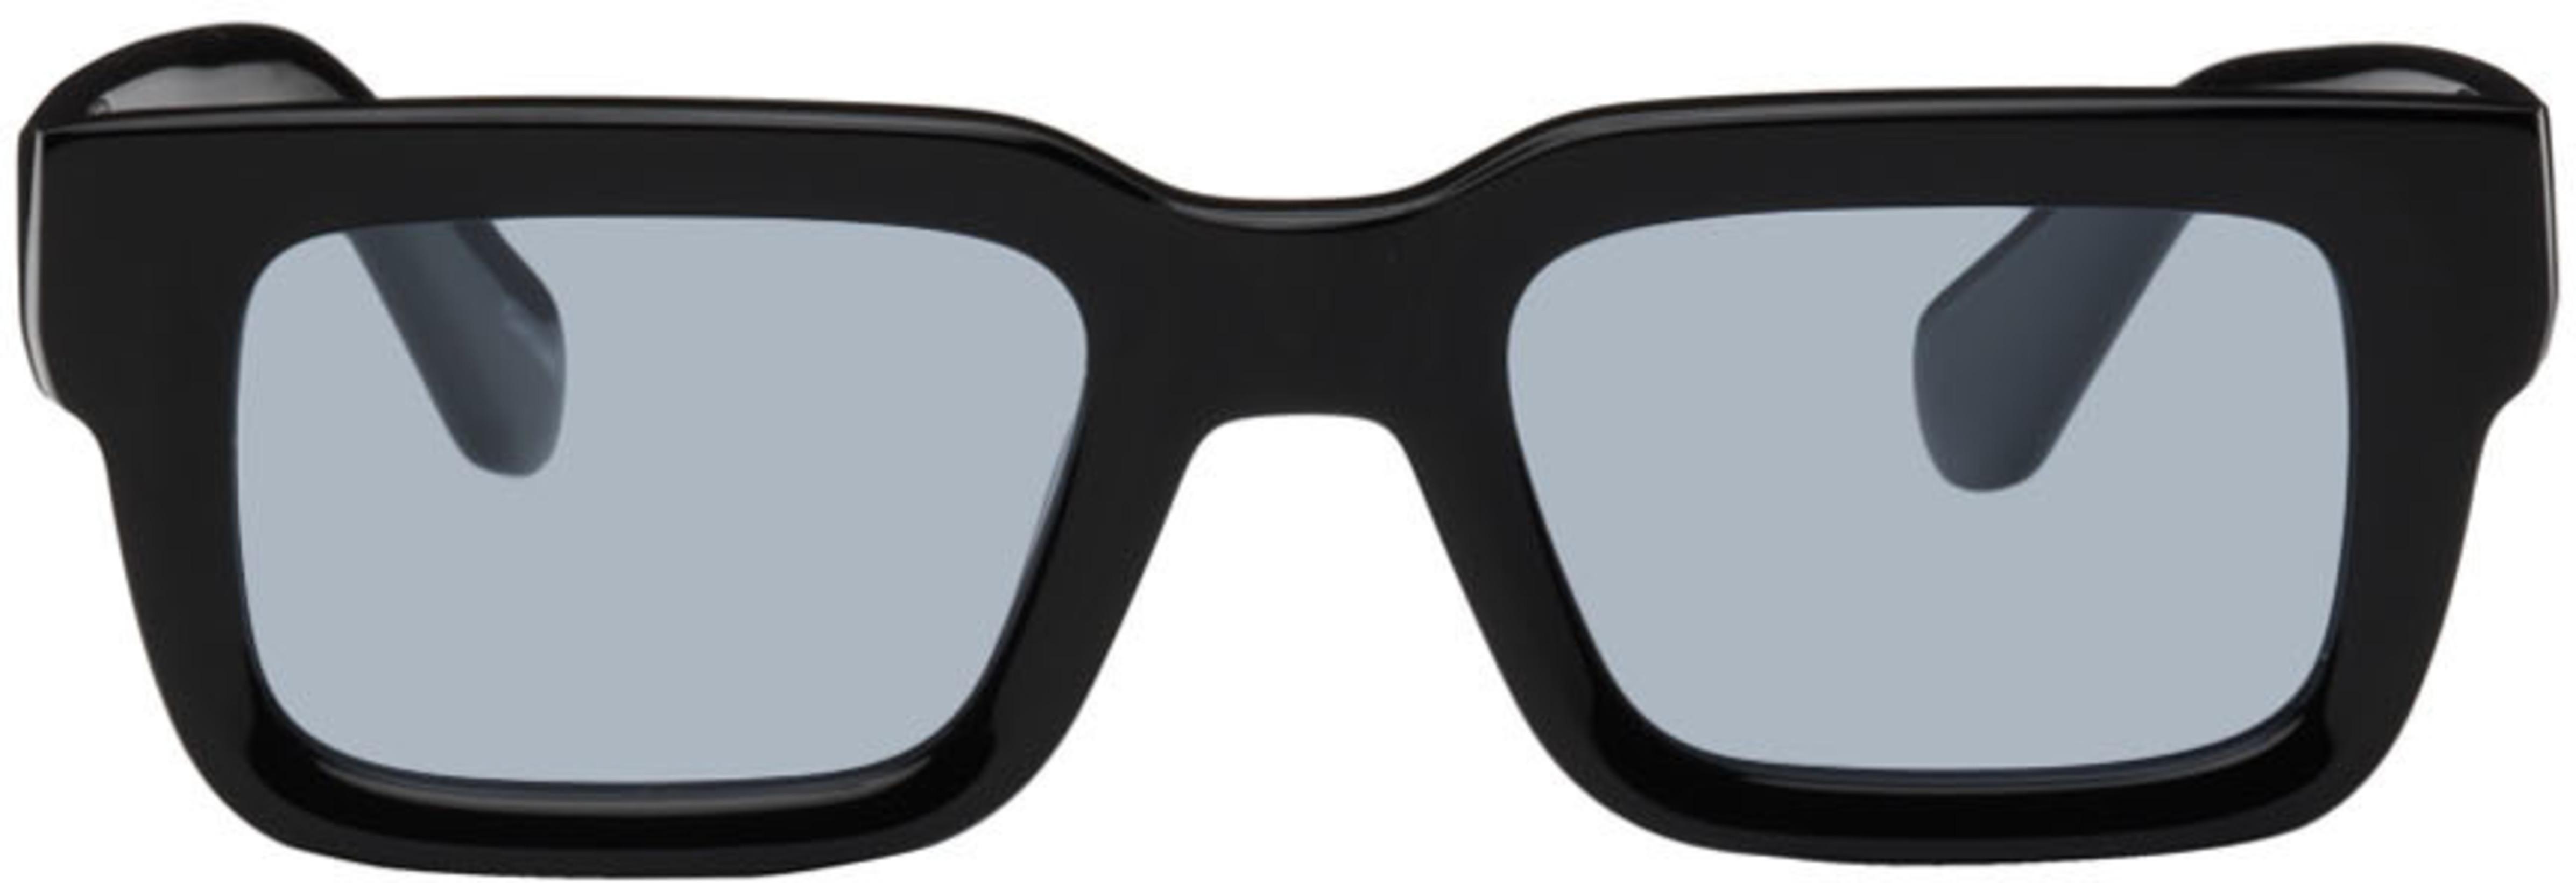 Black 05 Sunglasses by CHIMI